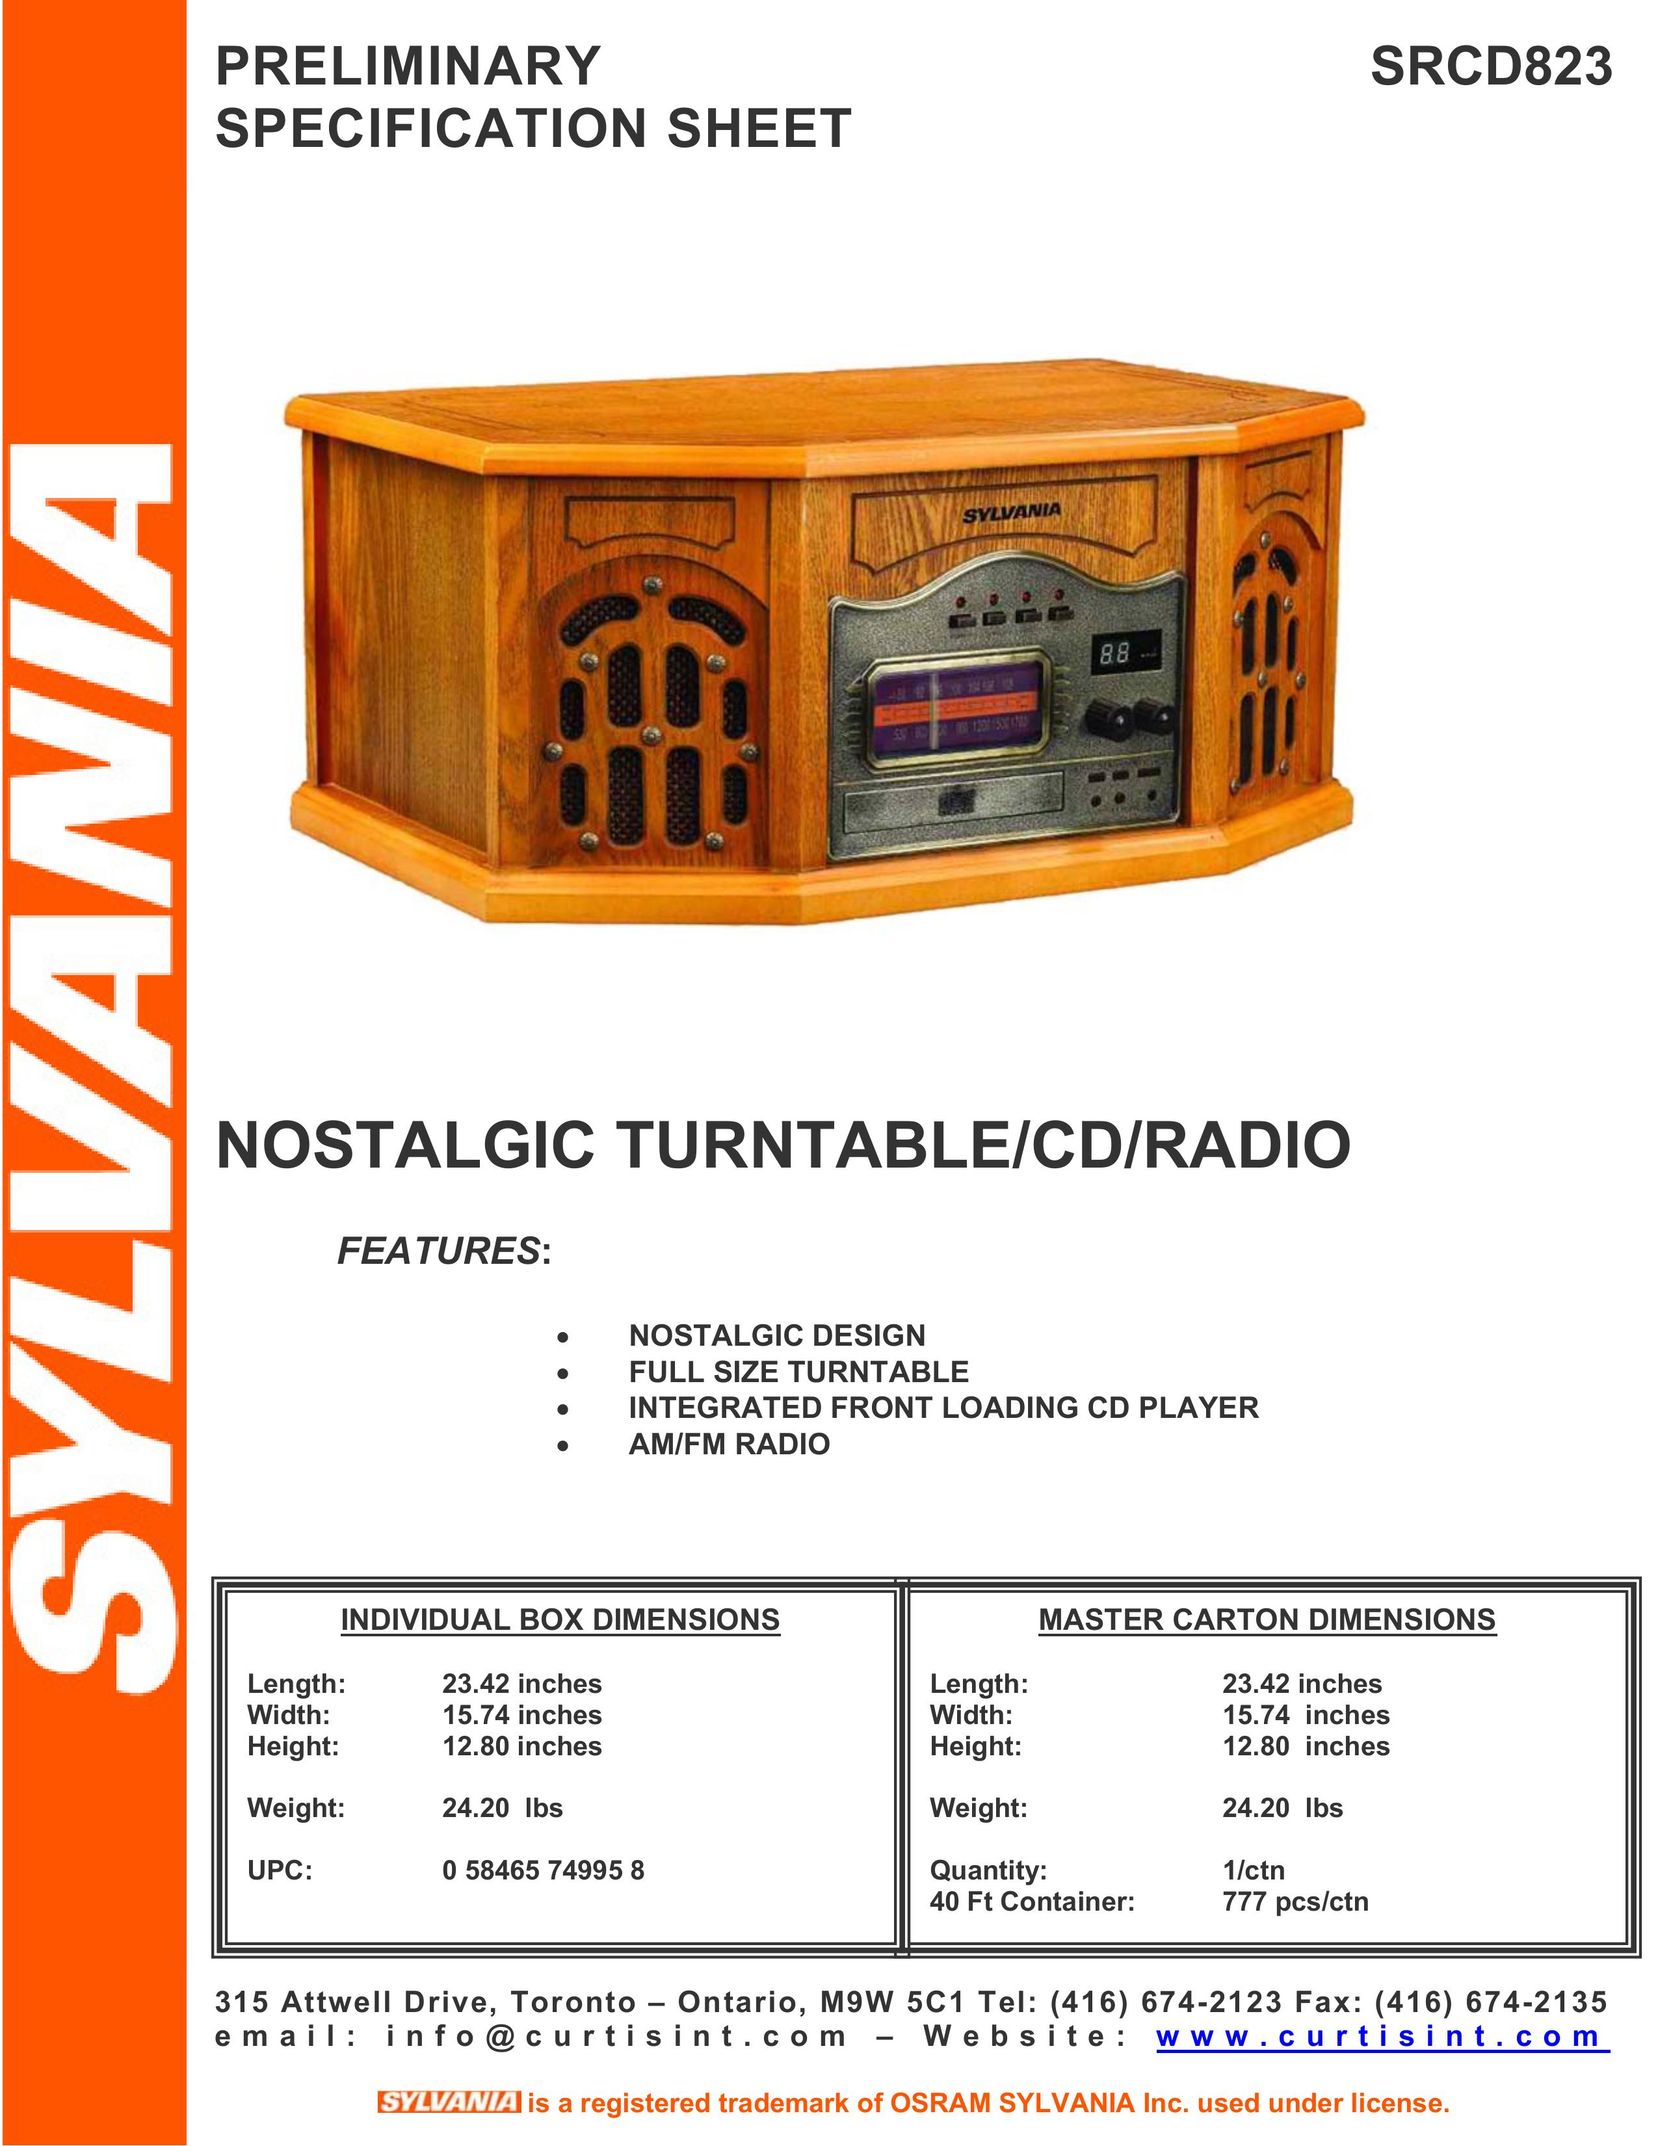 Sylvania SRCD823 Turntable User Manual